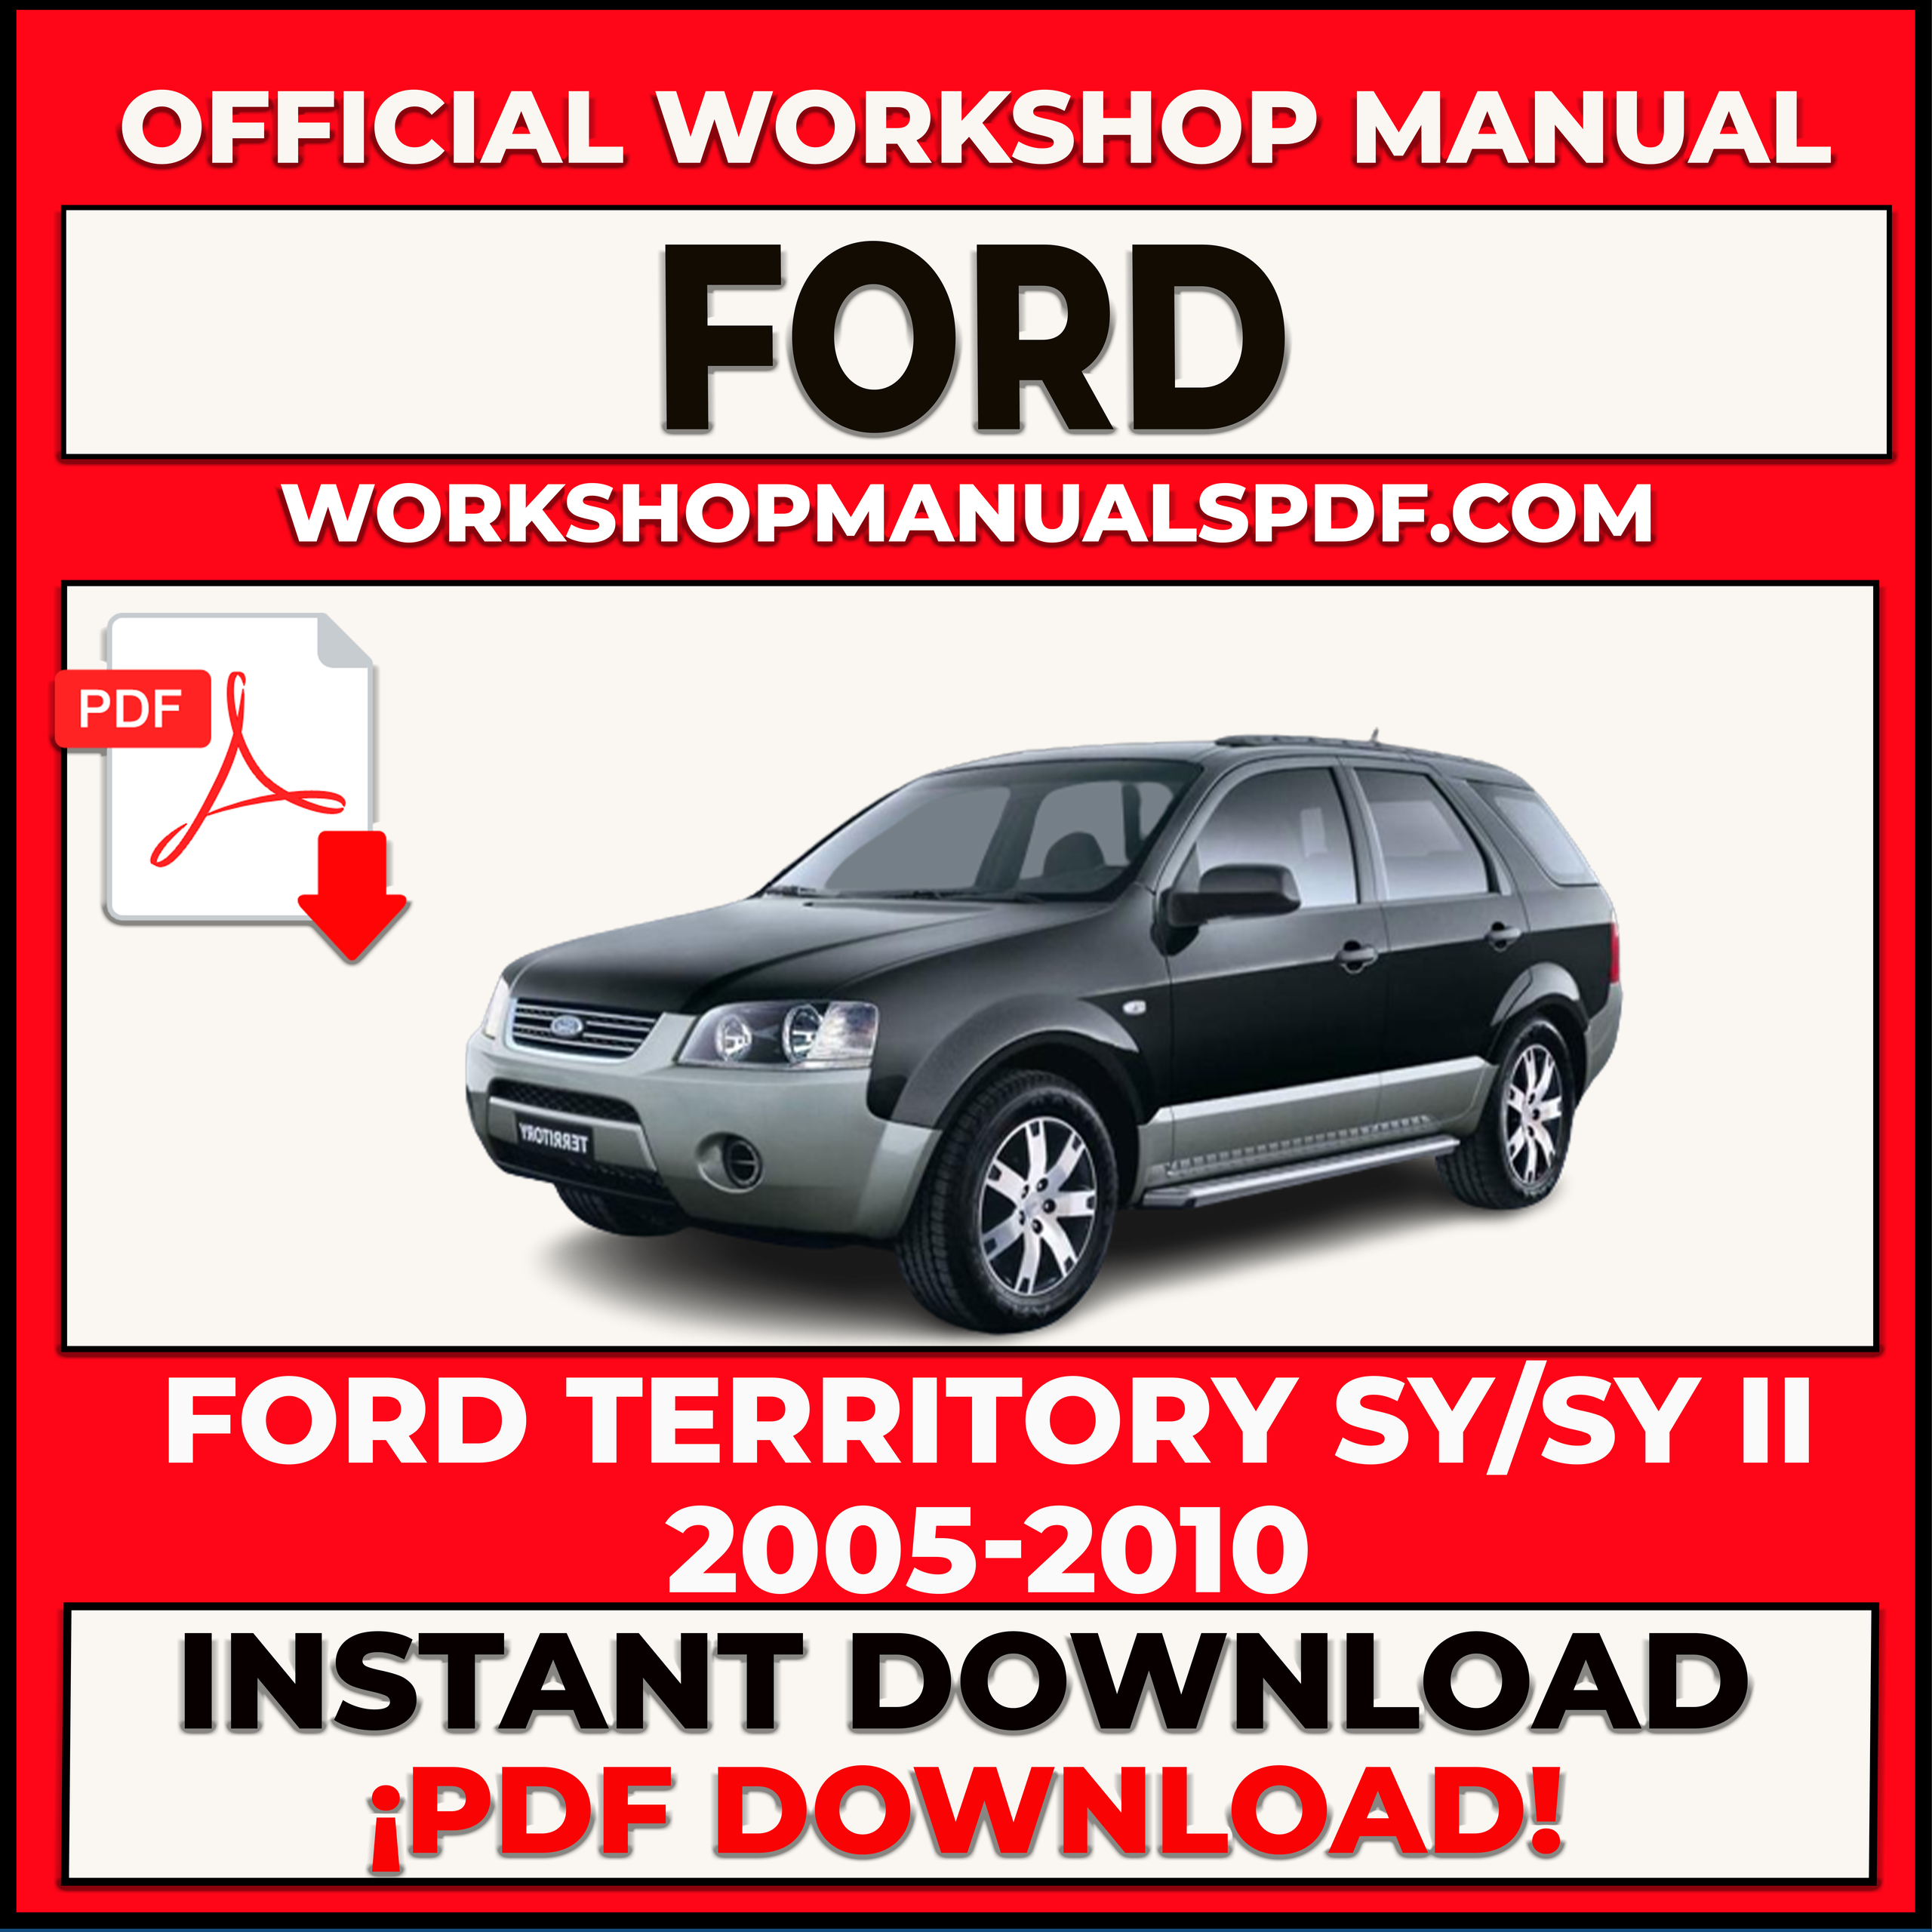 Ford Territory SY/SY II 2005-2010 Workshop Repair Manual